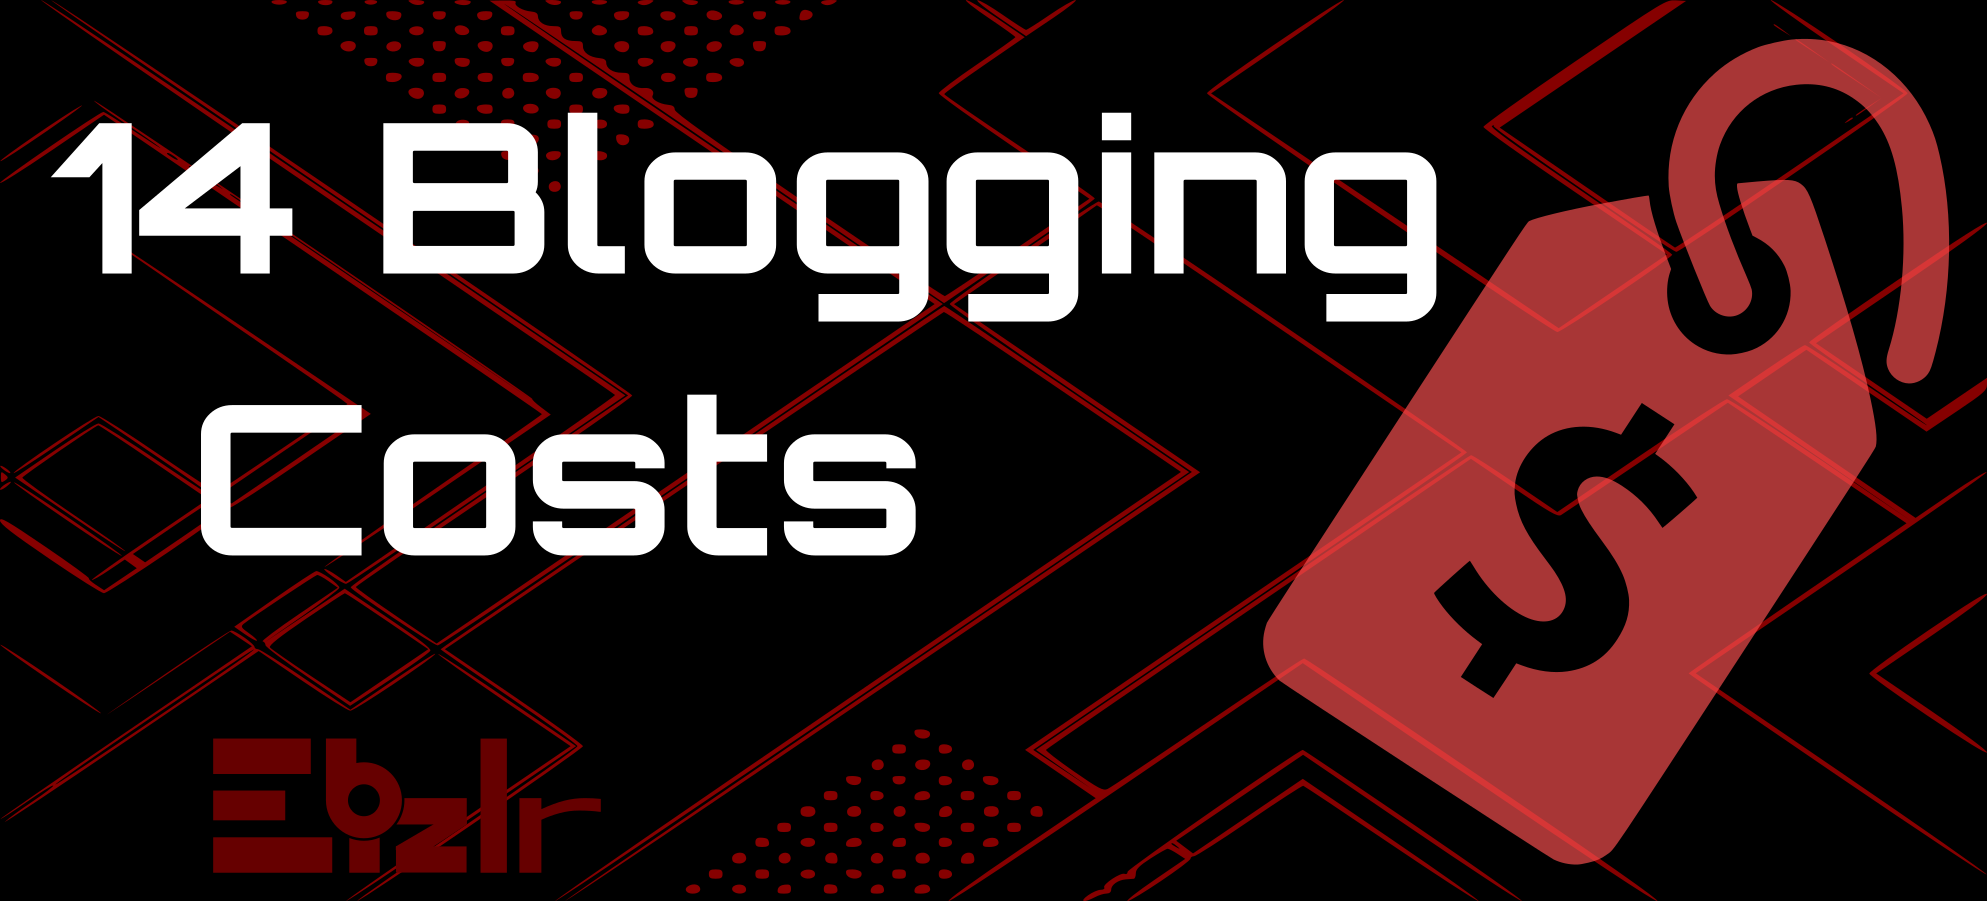 Blogging costs